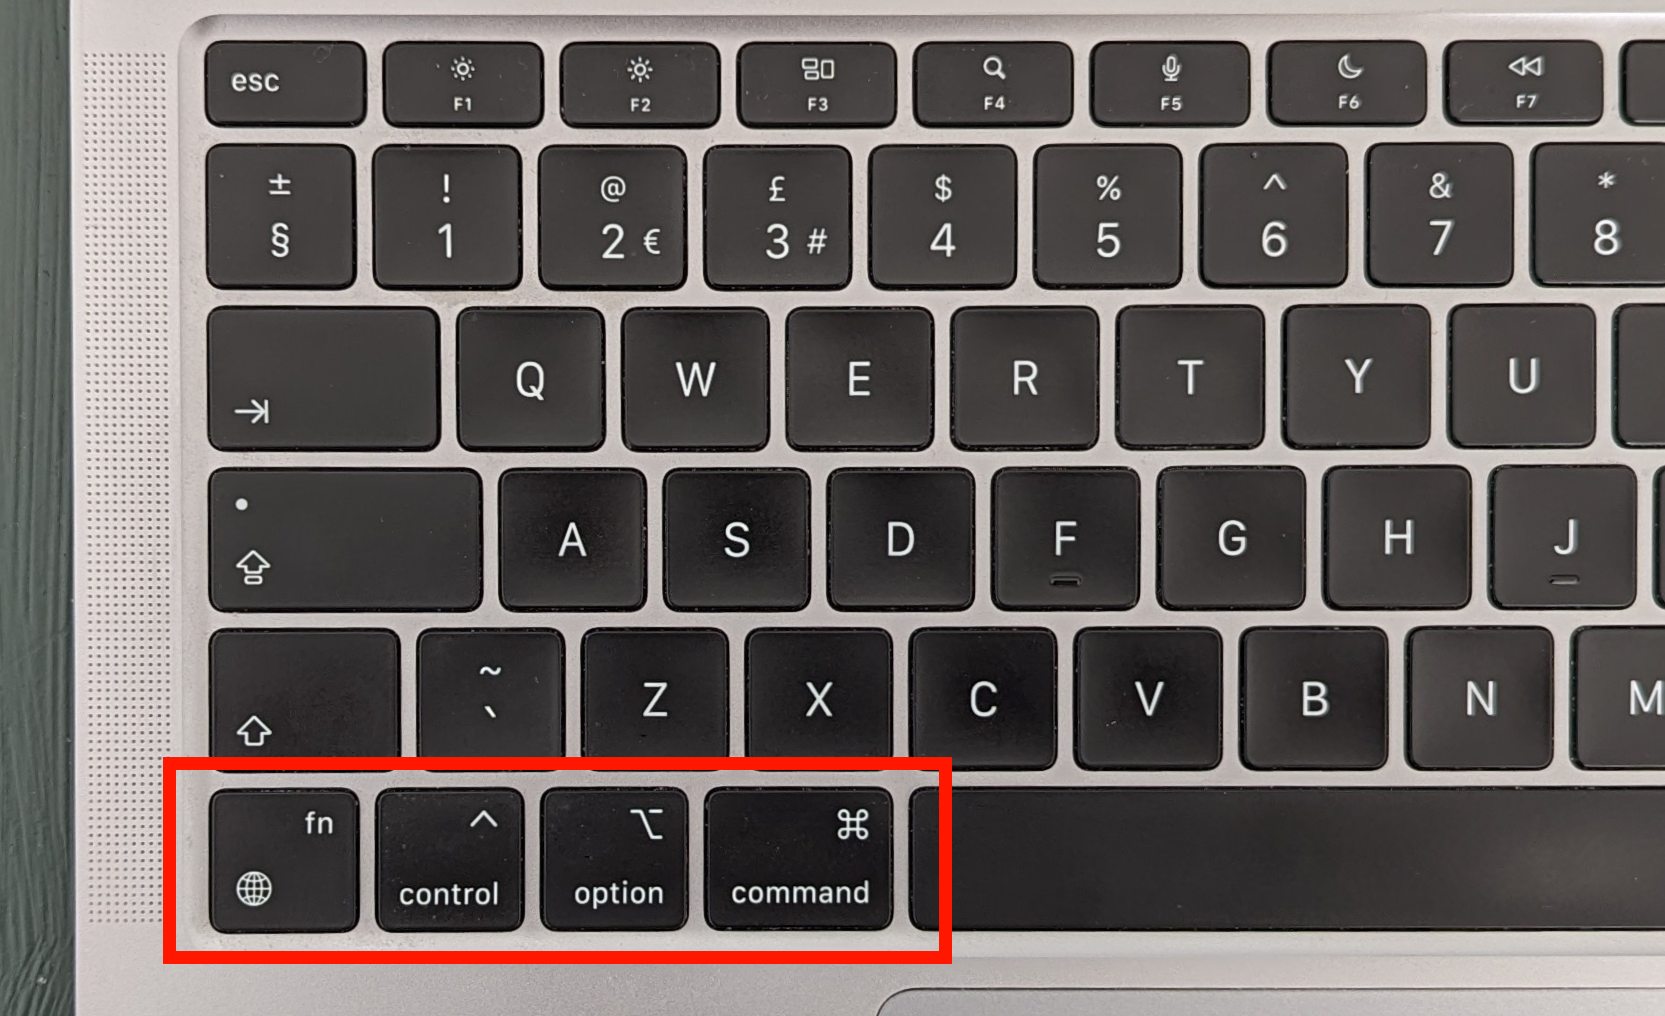 The Globe, Control, Option, and Command keys on a Mac keyboard.